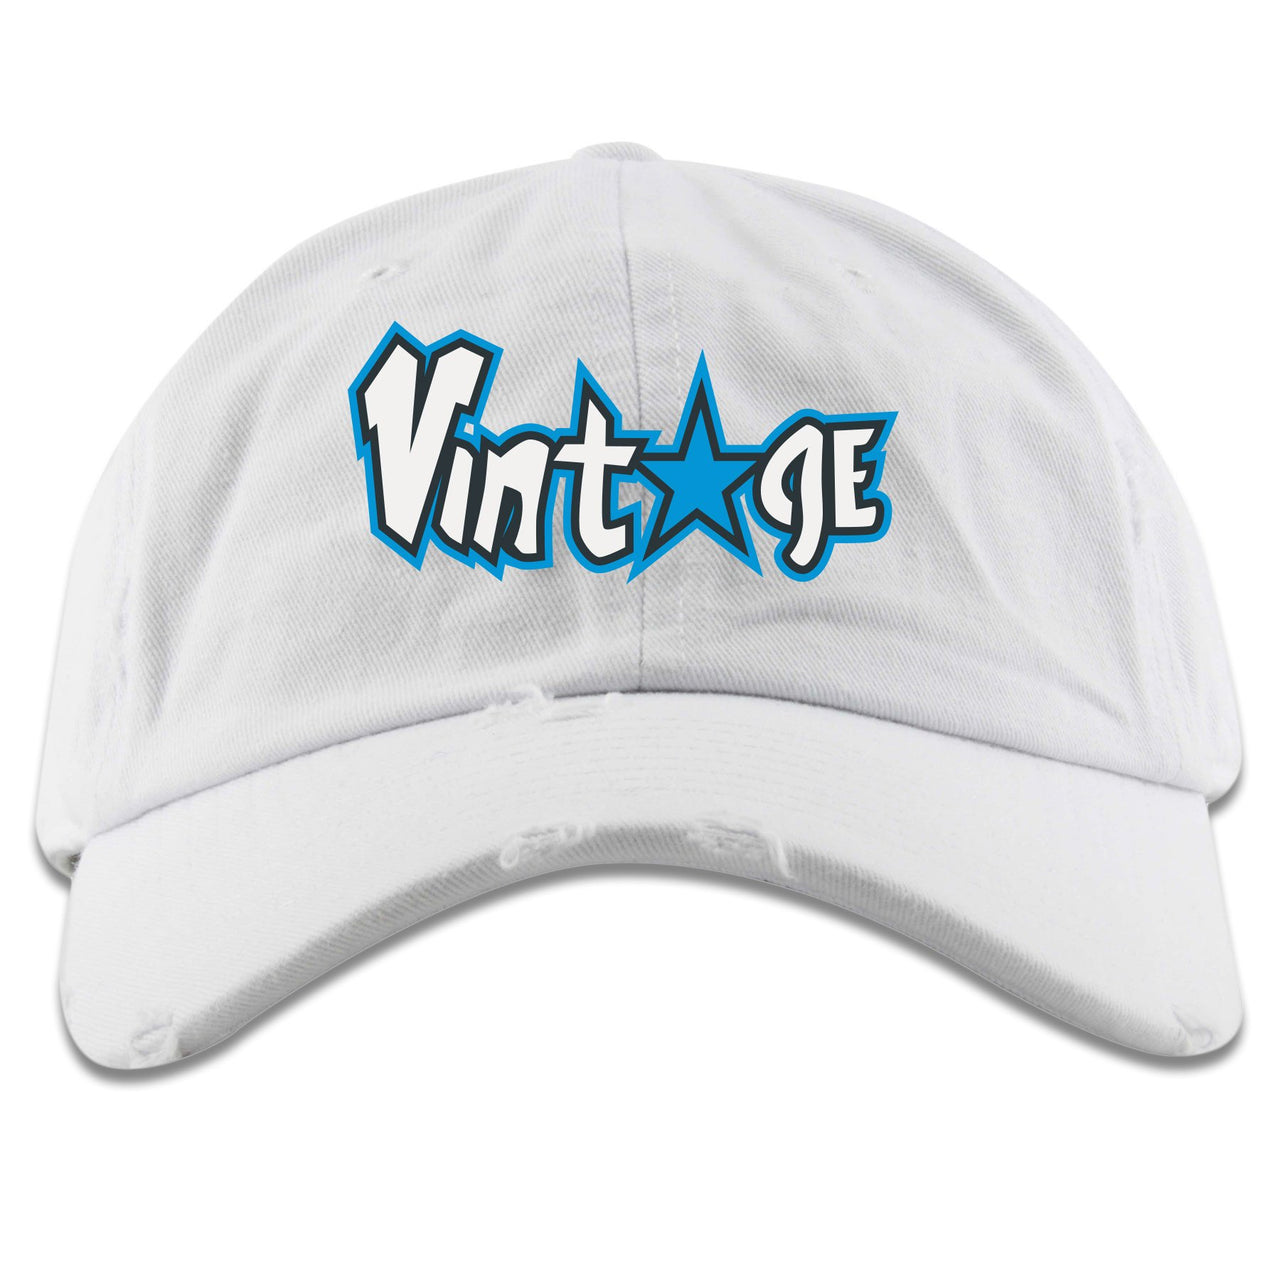 University Blue Blazers Distressed Dad Hat | Vintage Logo with Star, White